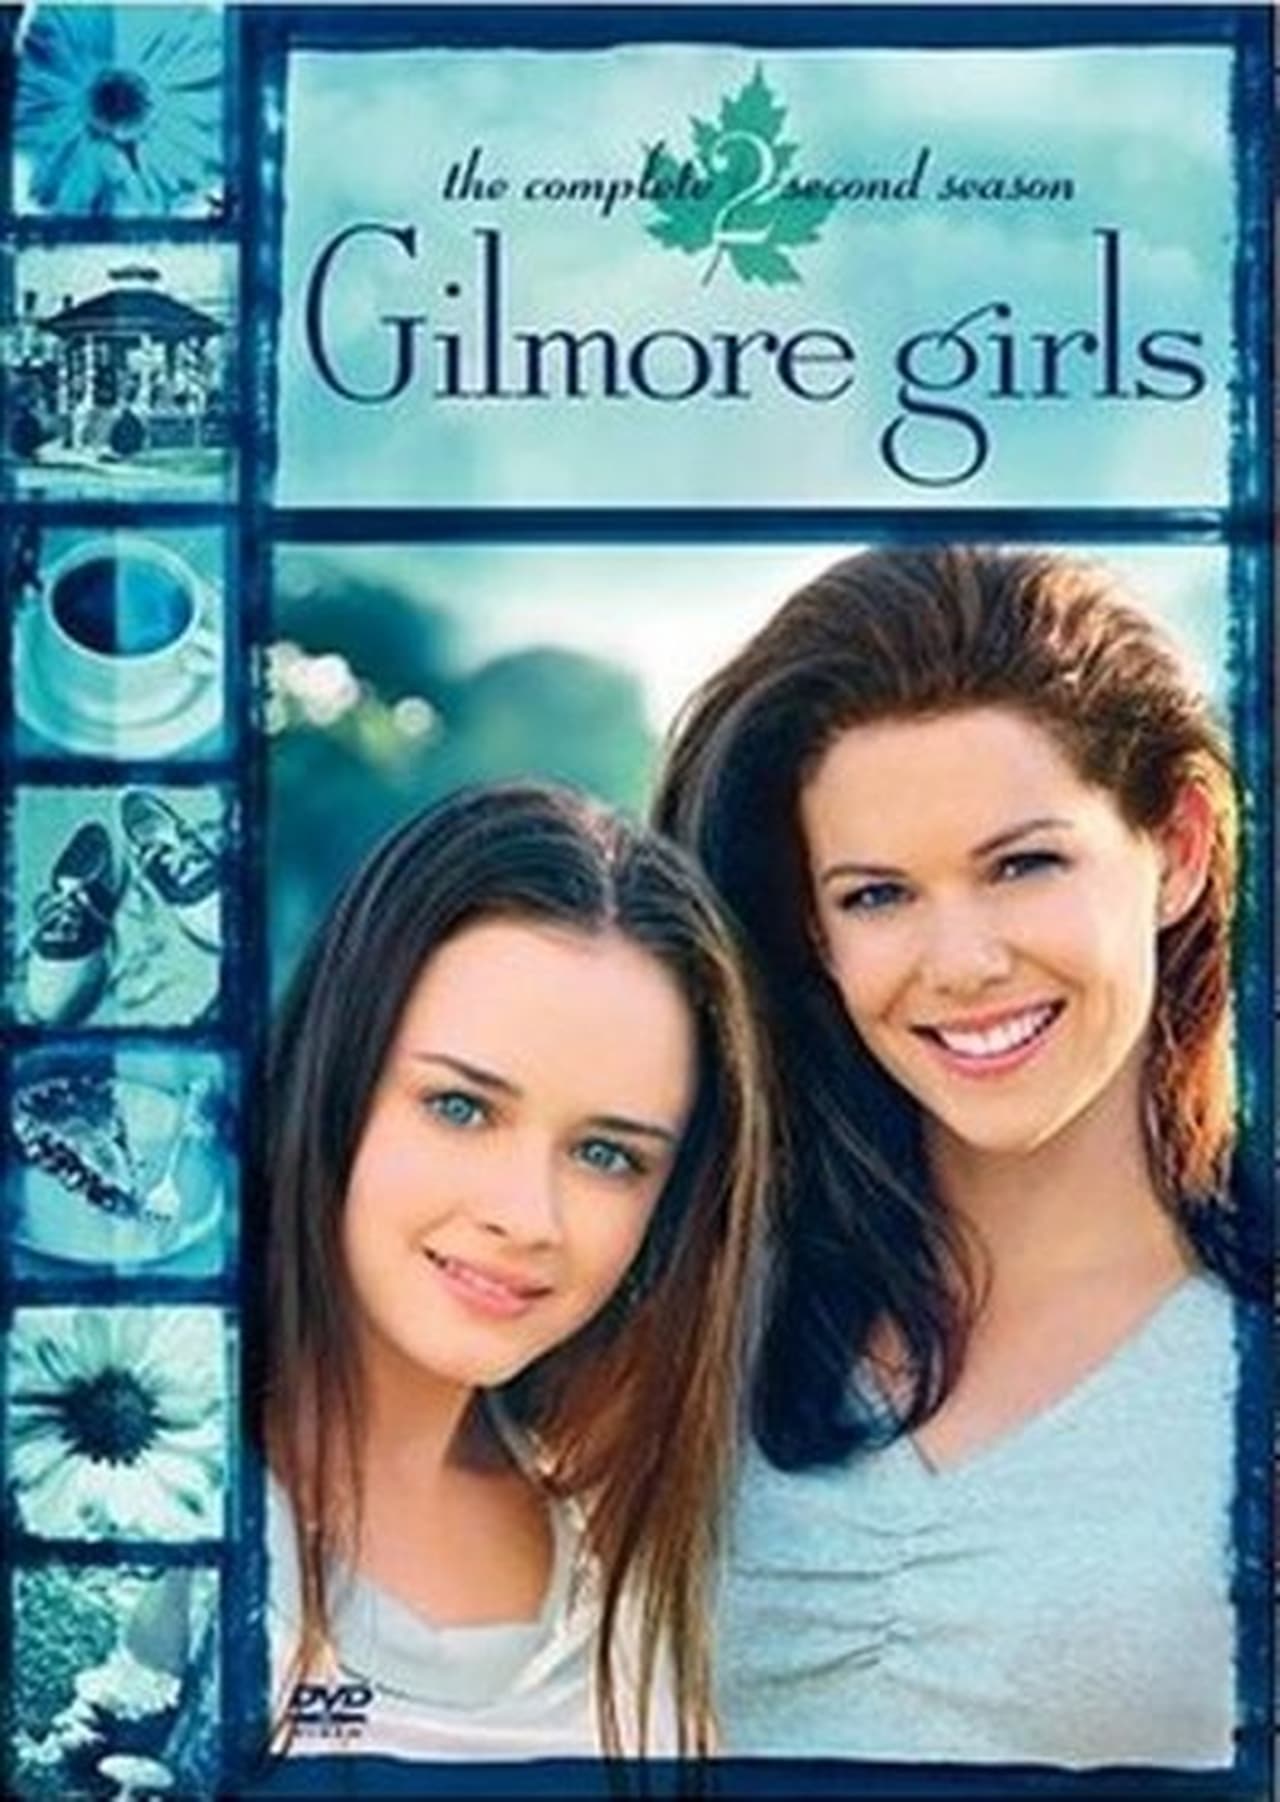 Image Las chicas Gilmore